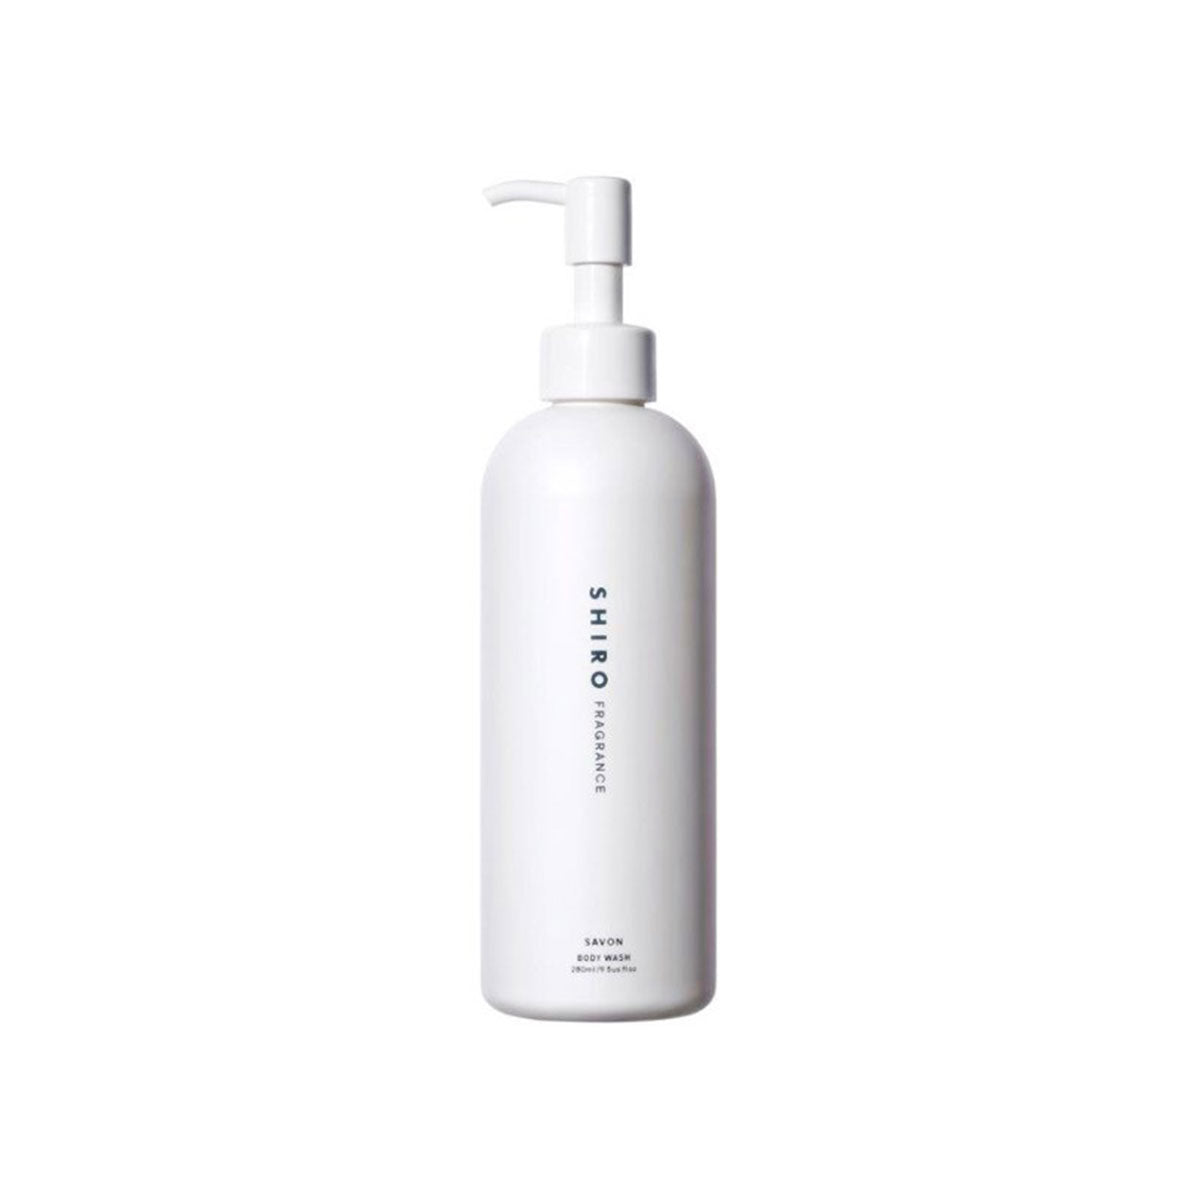 Savon Body Shampoo Soap 280ml